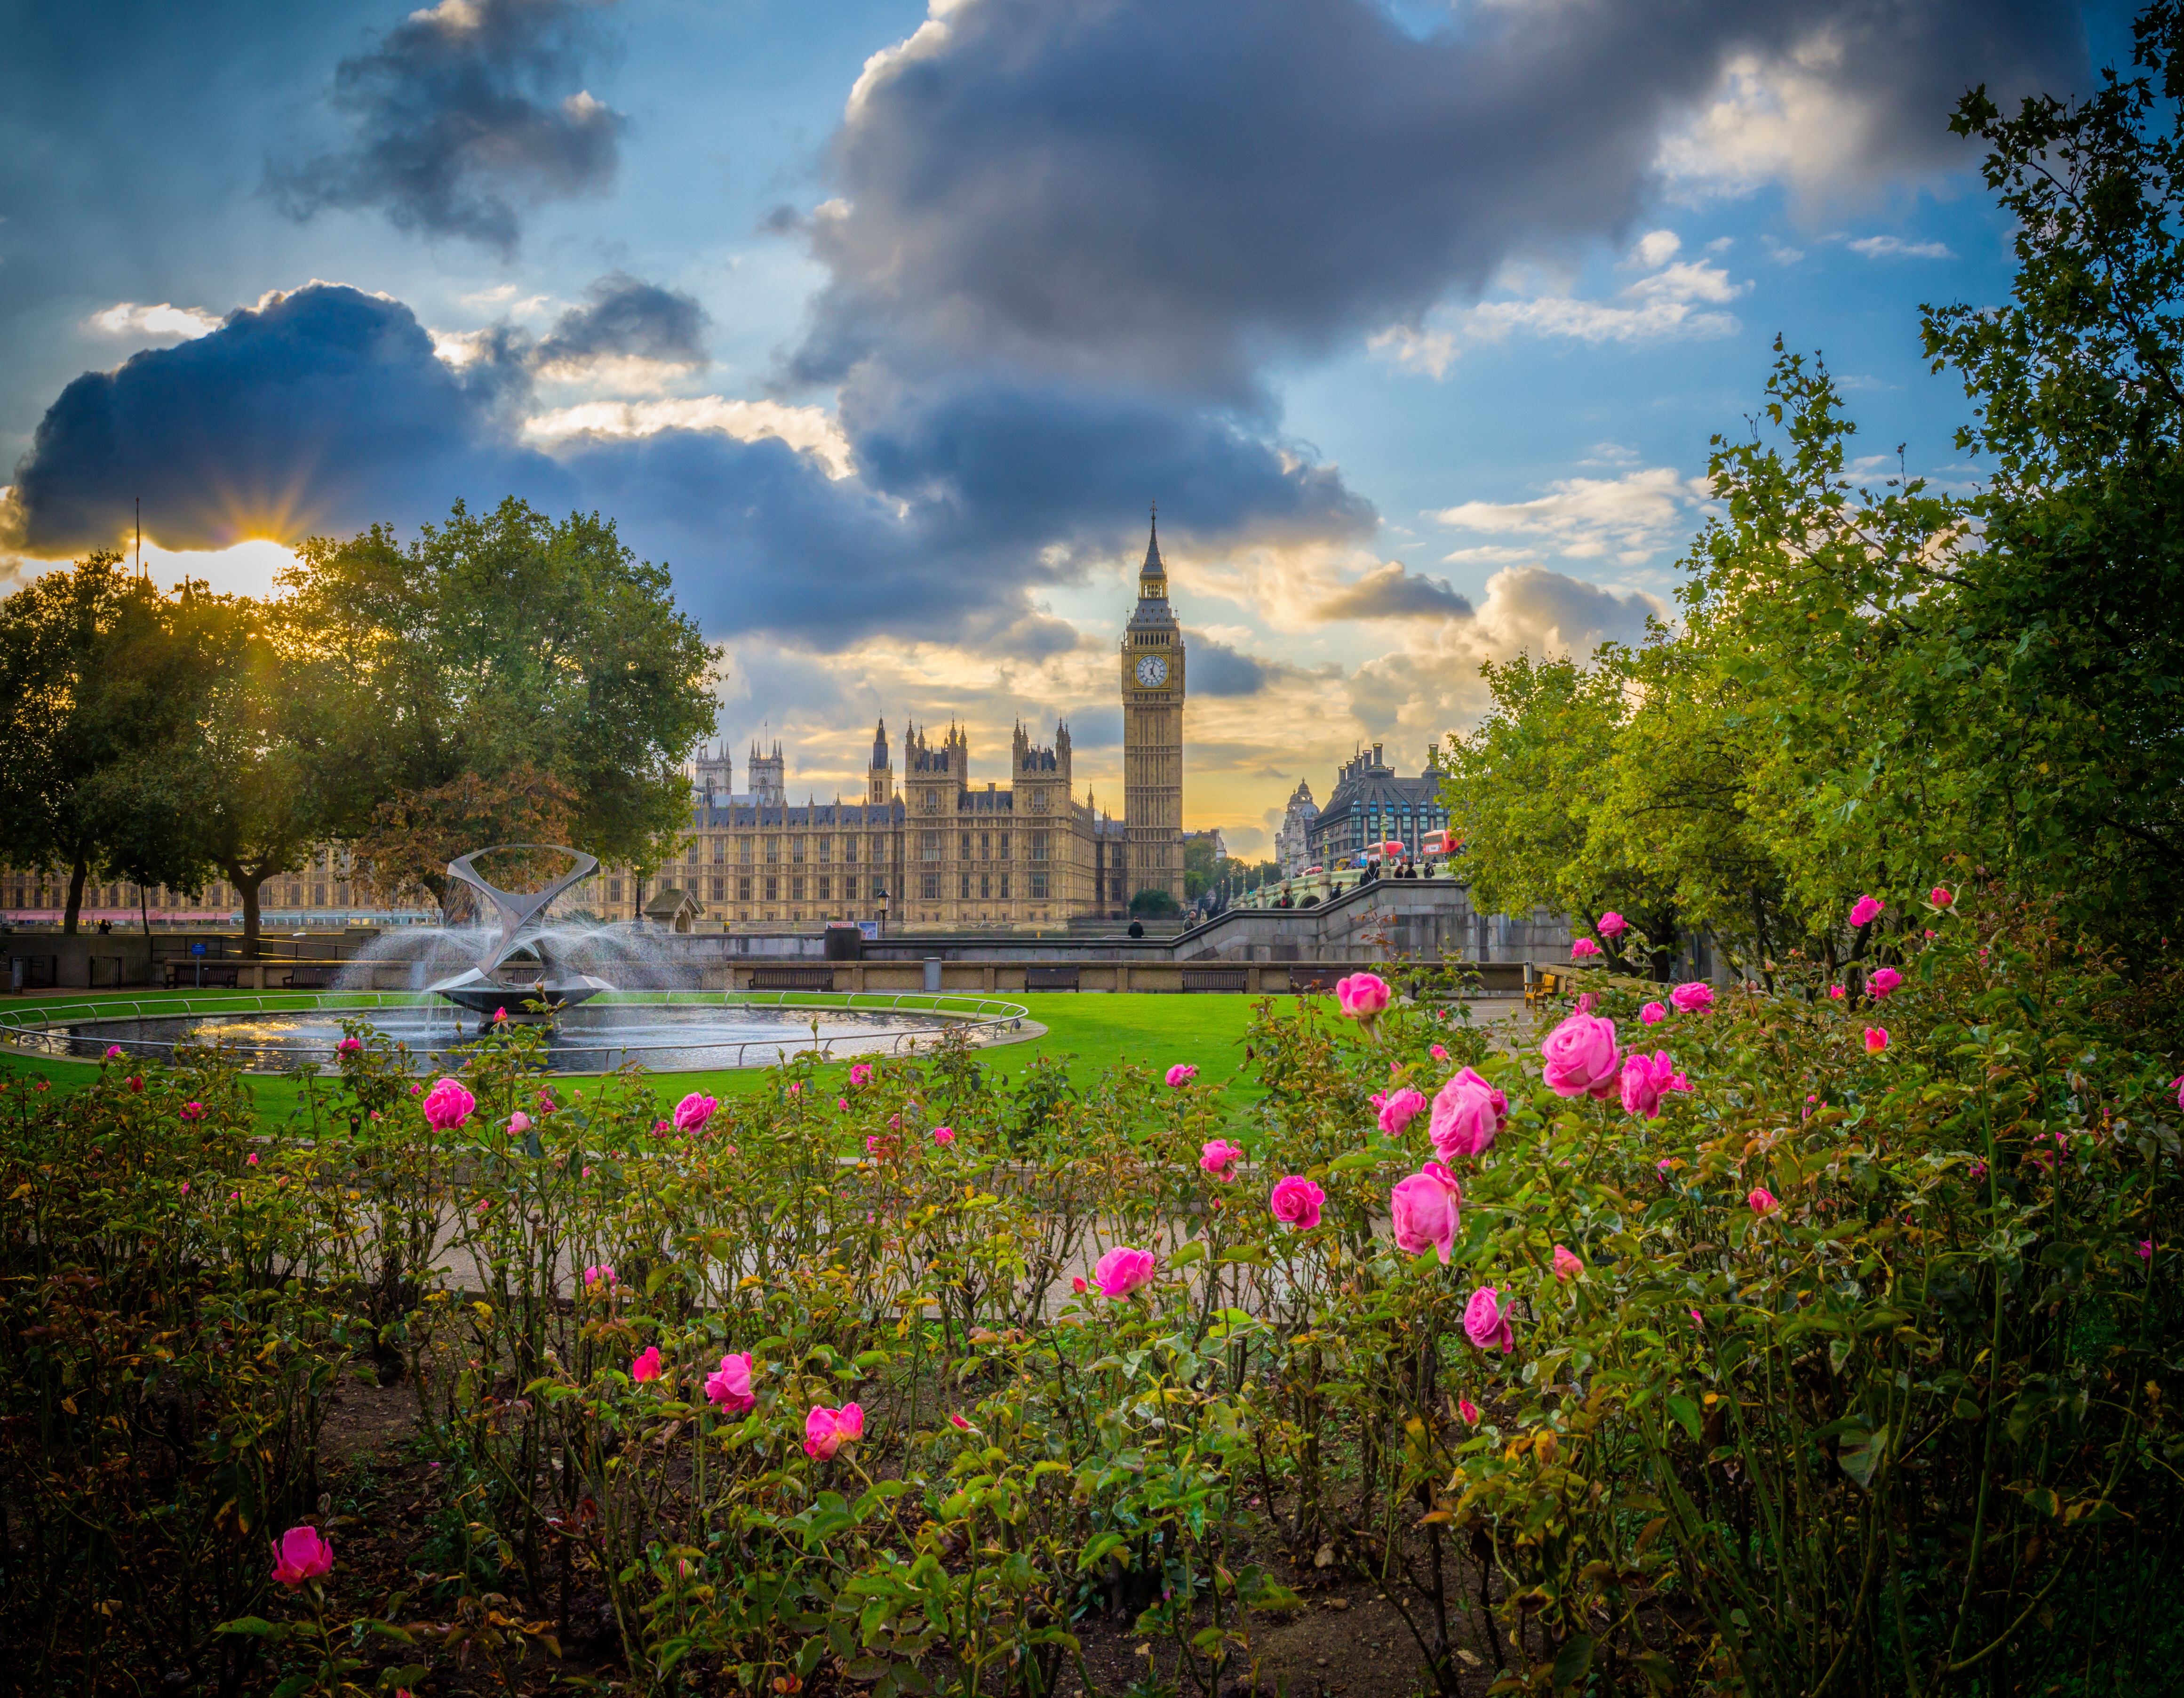 palace of westminster, london, england, park, palaces, man made, big ben, fountain, rose